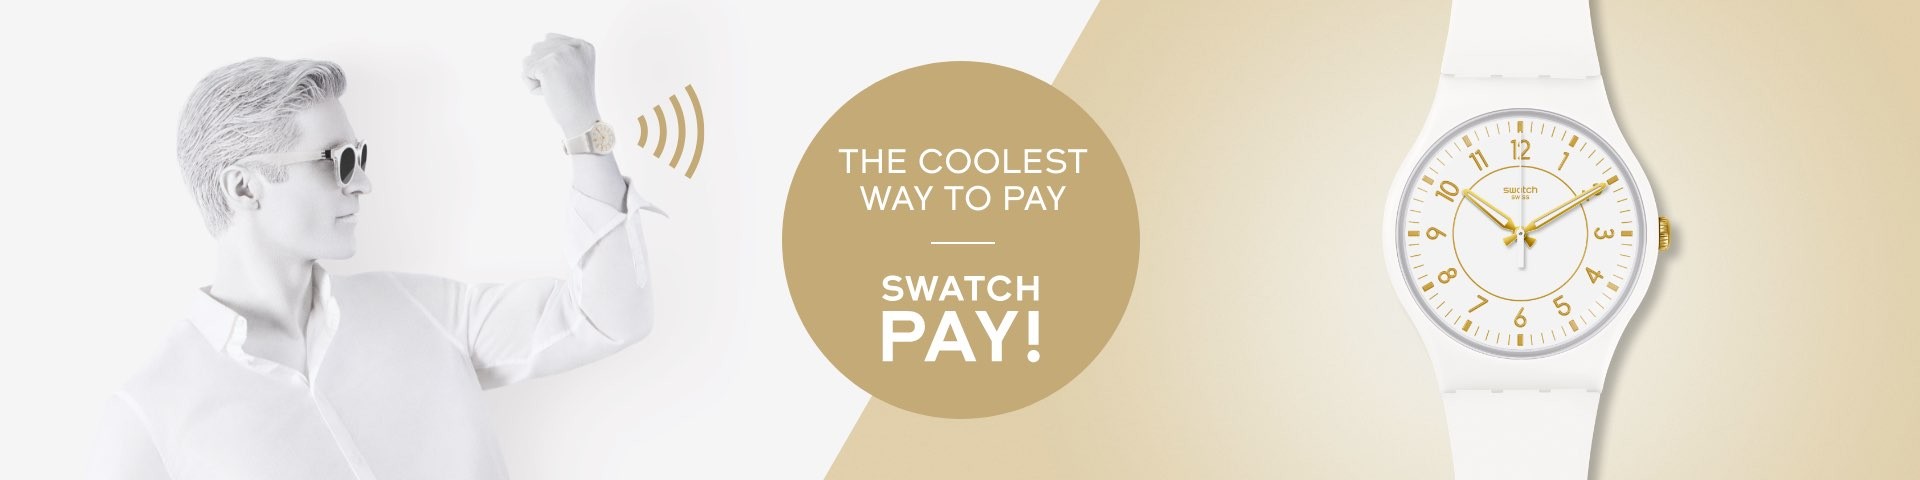 swatch pay launch desktop